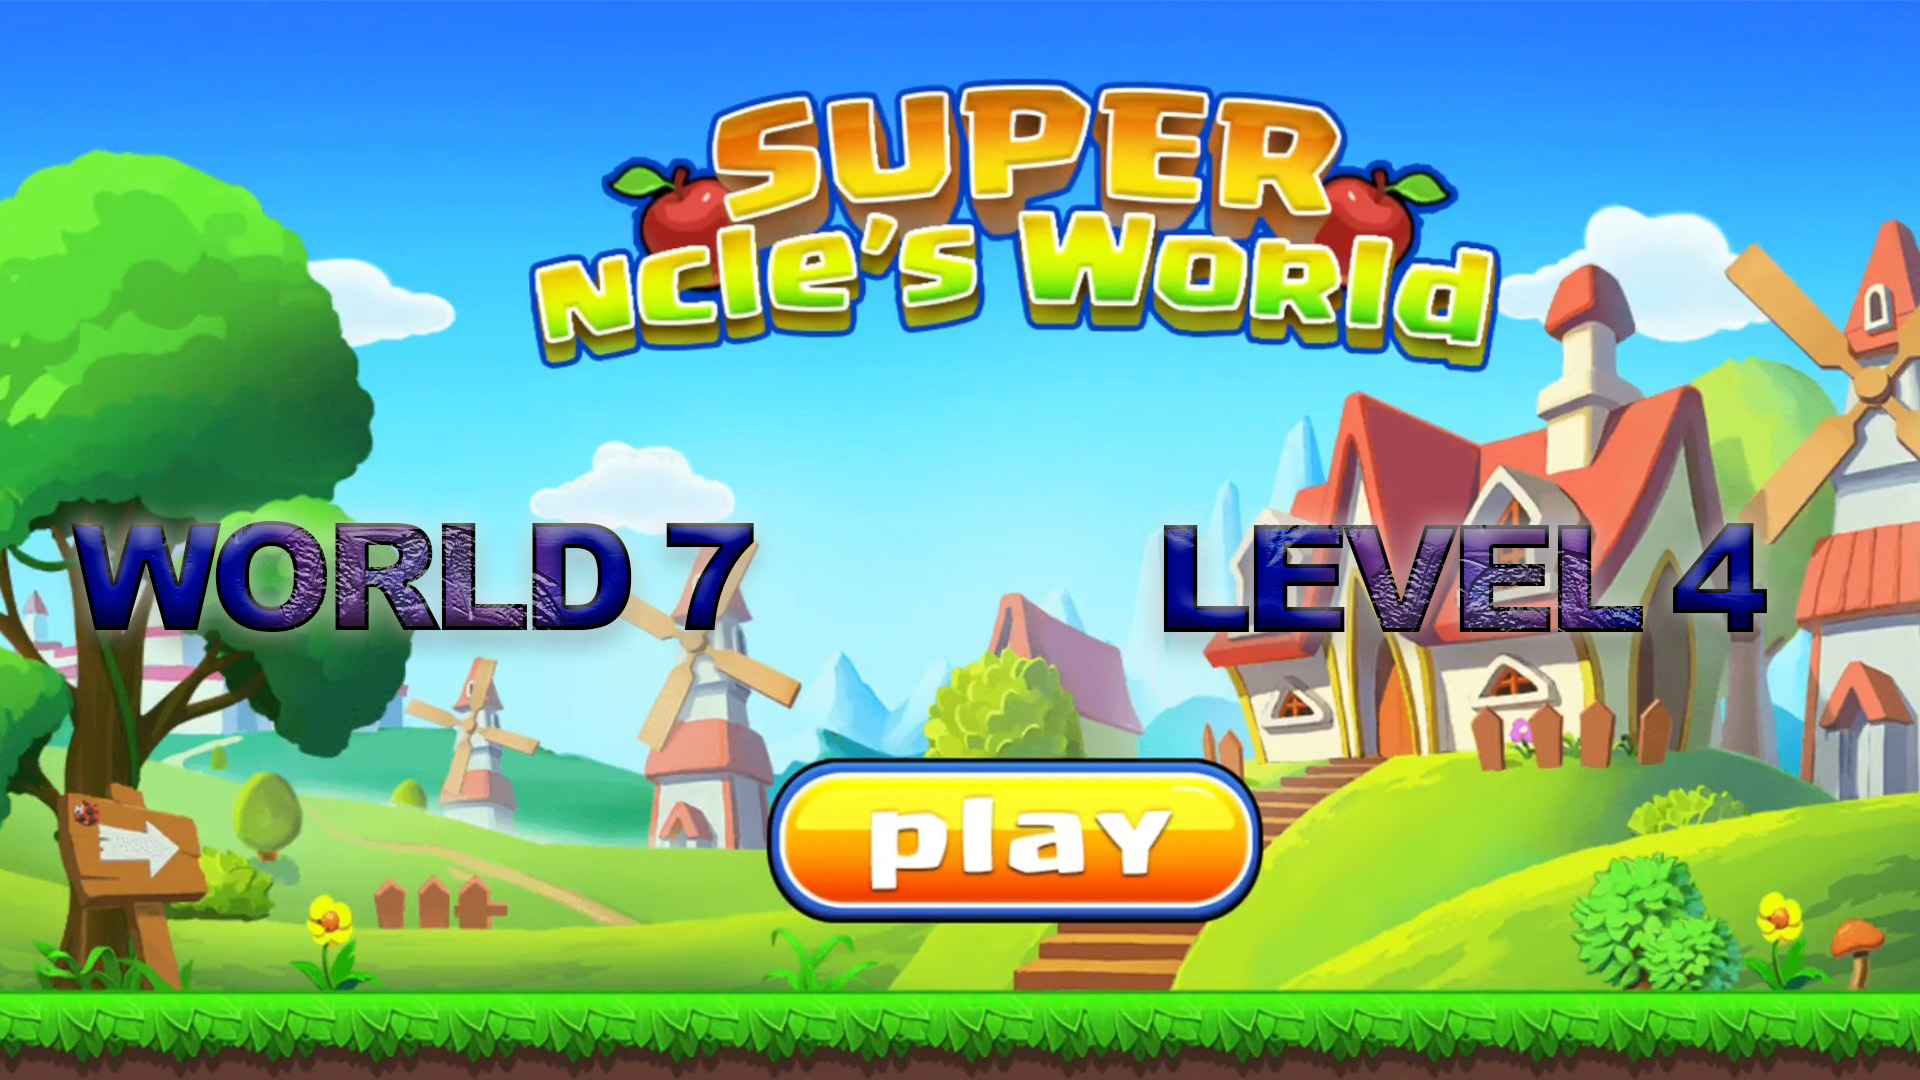 Super ncle's  World 7. Level 4.